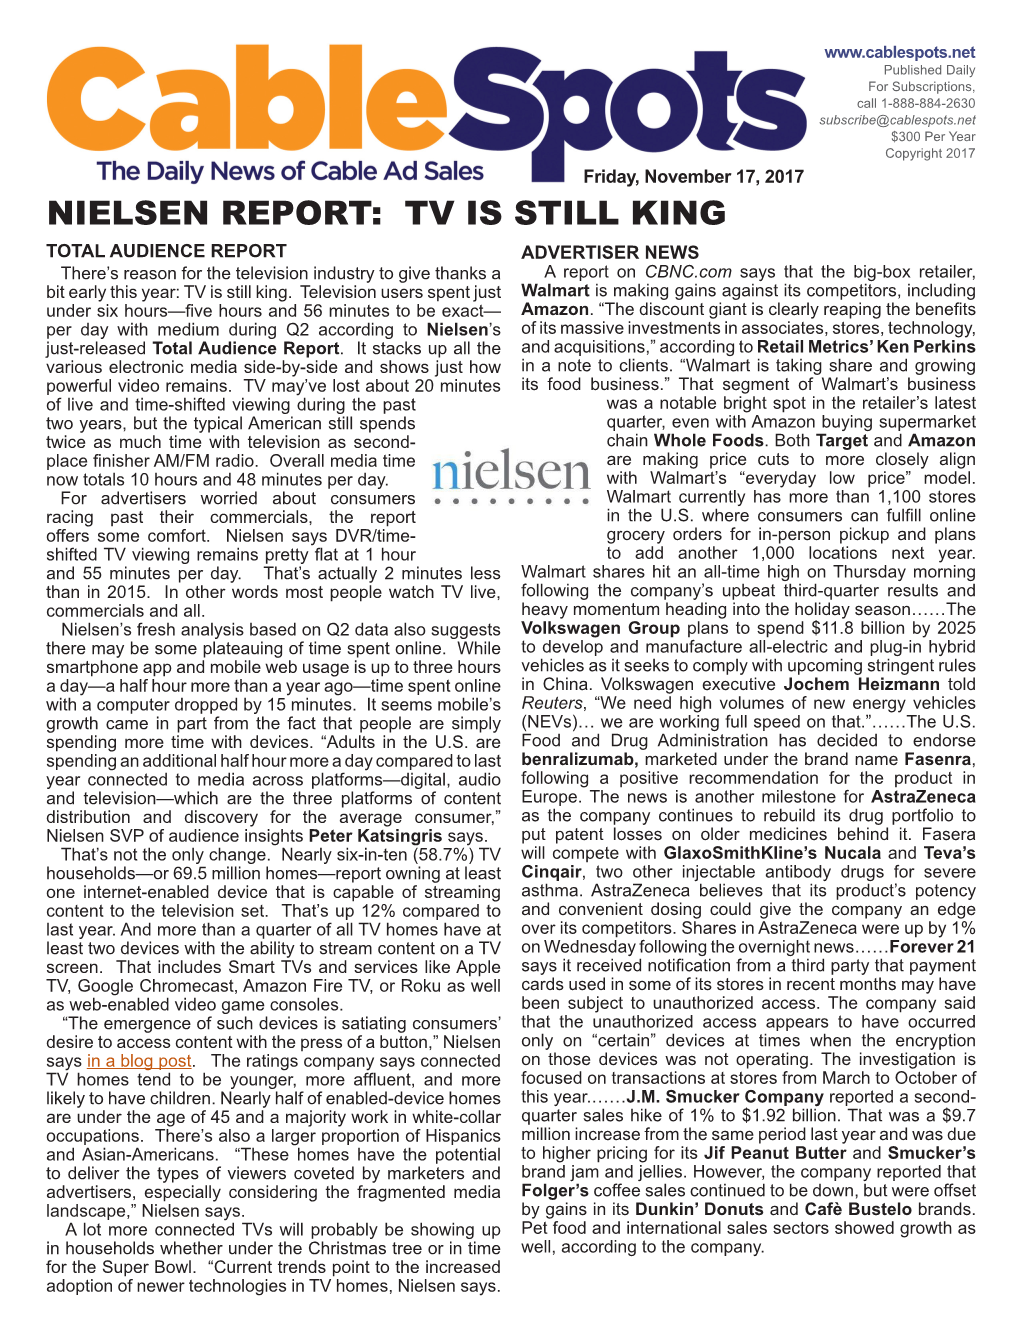 Nielsen Report: Tv Is Still King